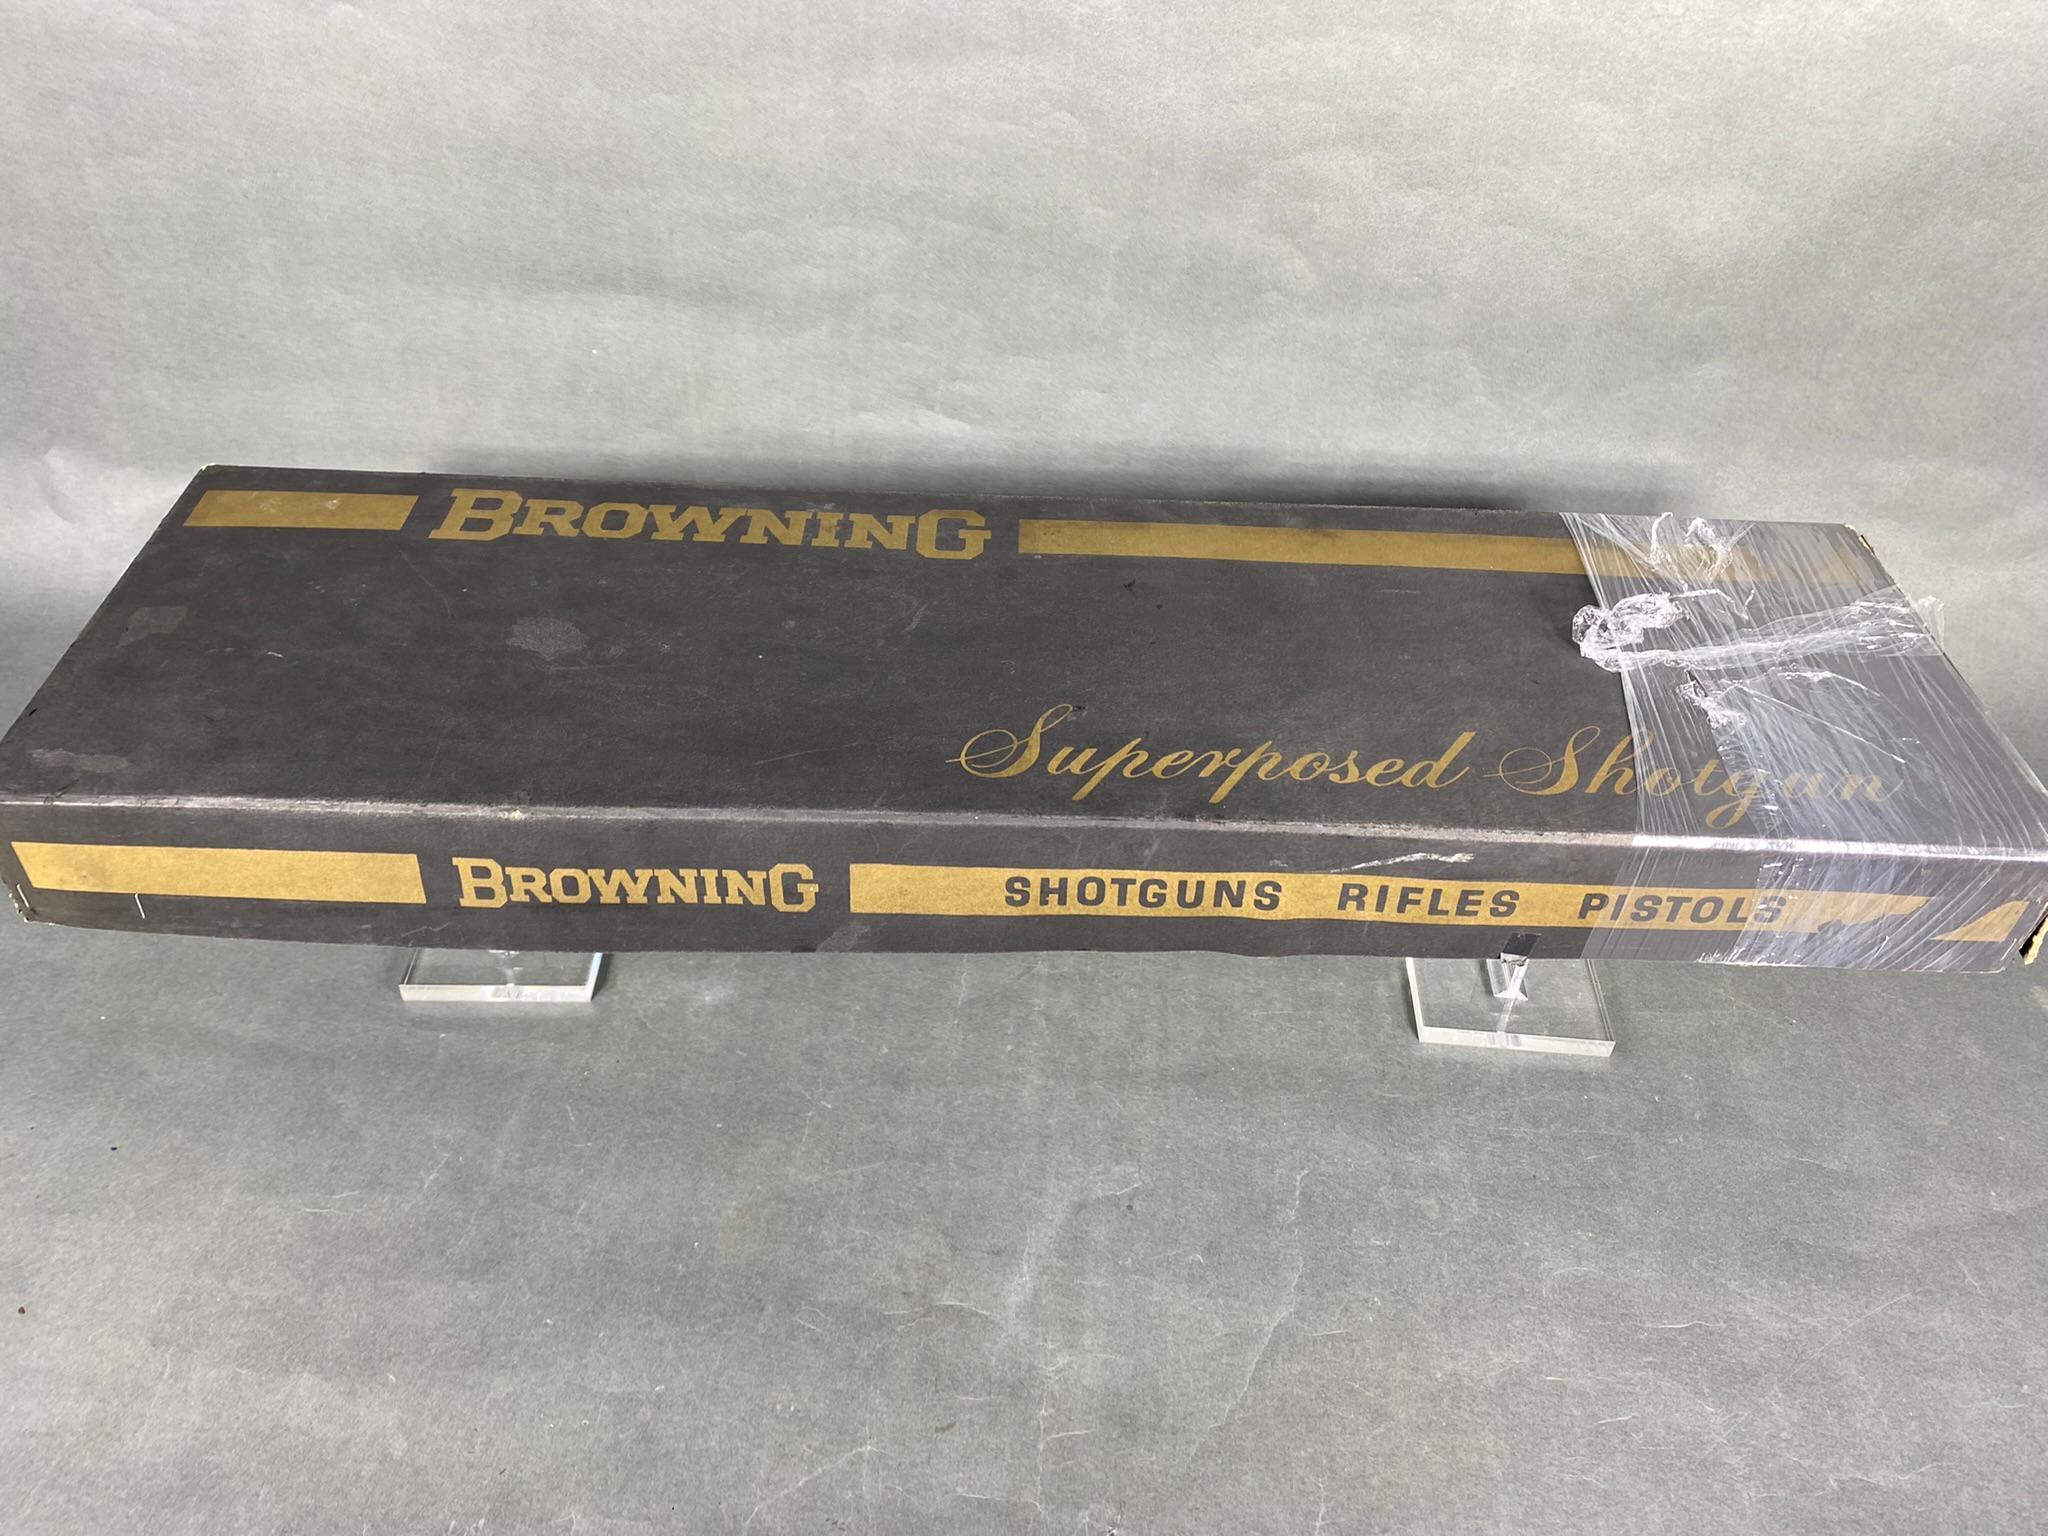 Browning Superposed O/U Shotgun Box 12 ga